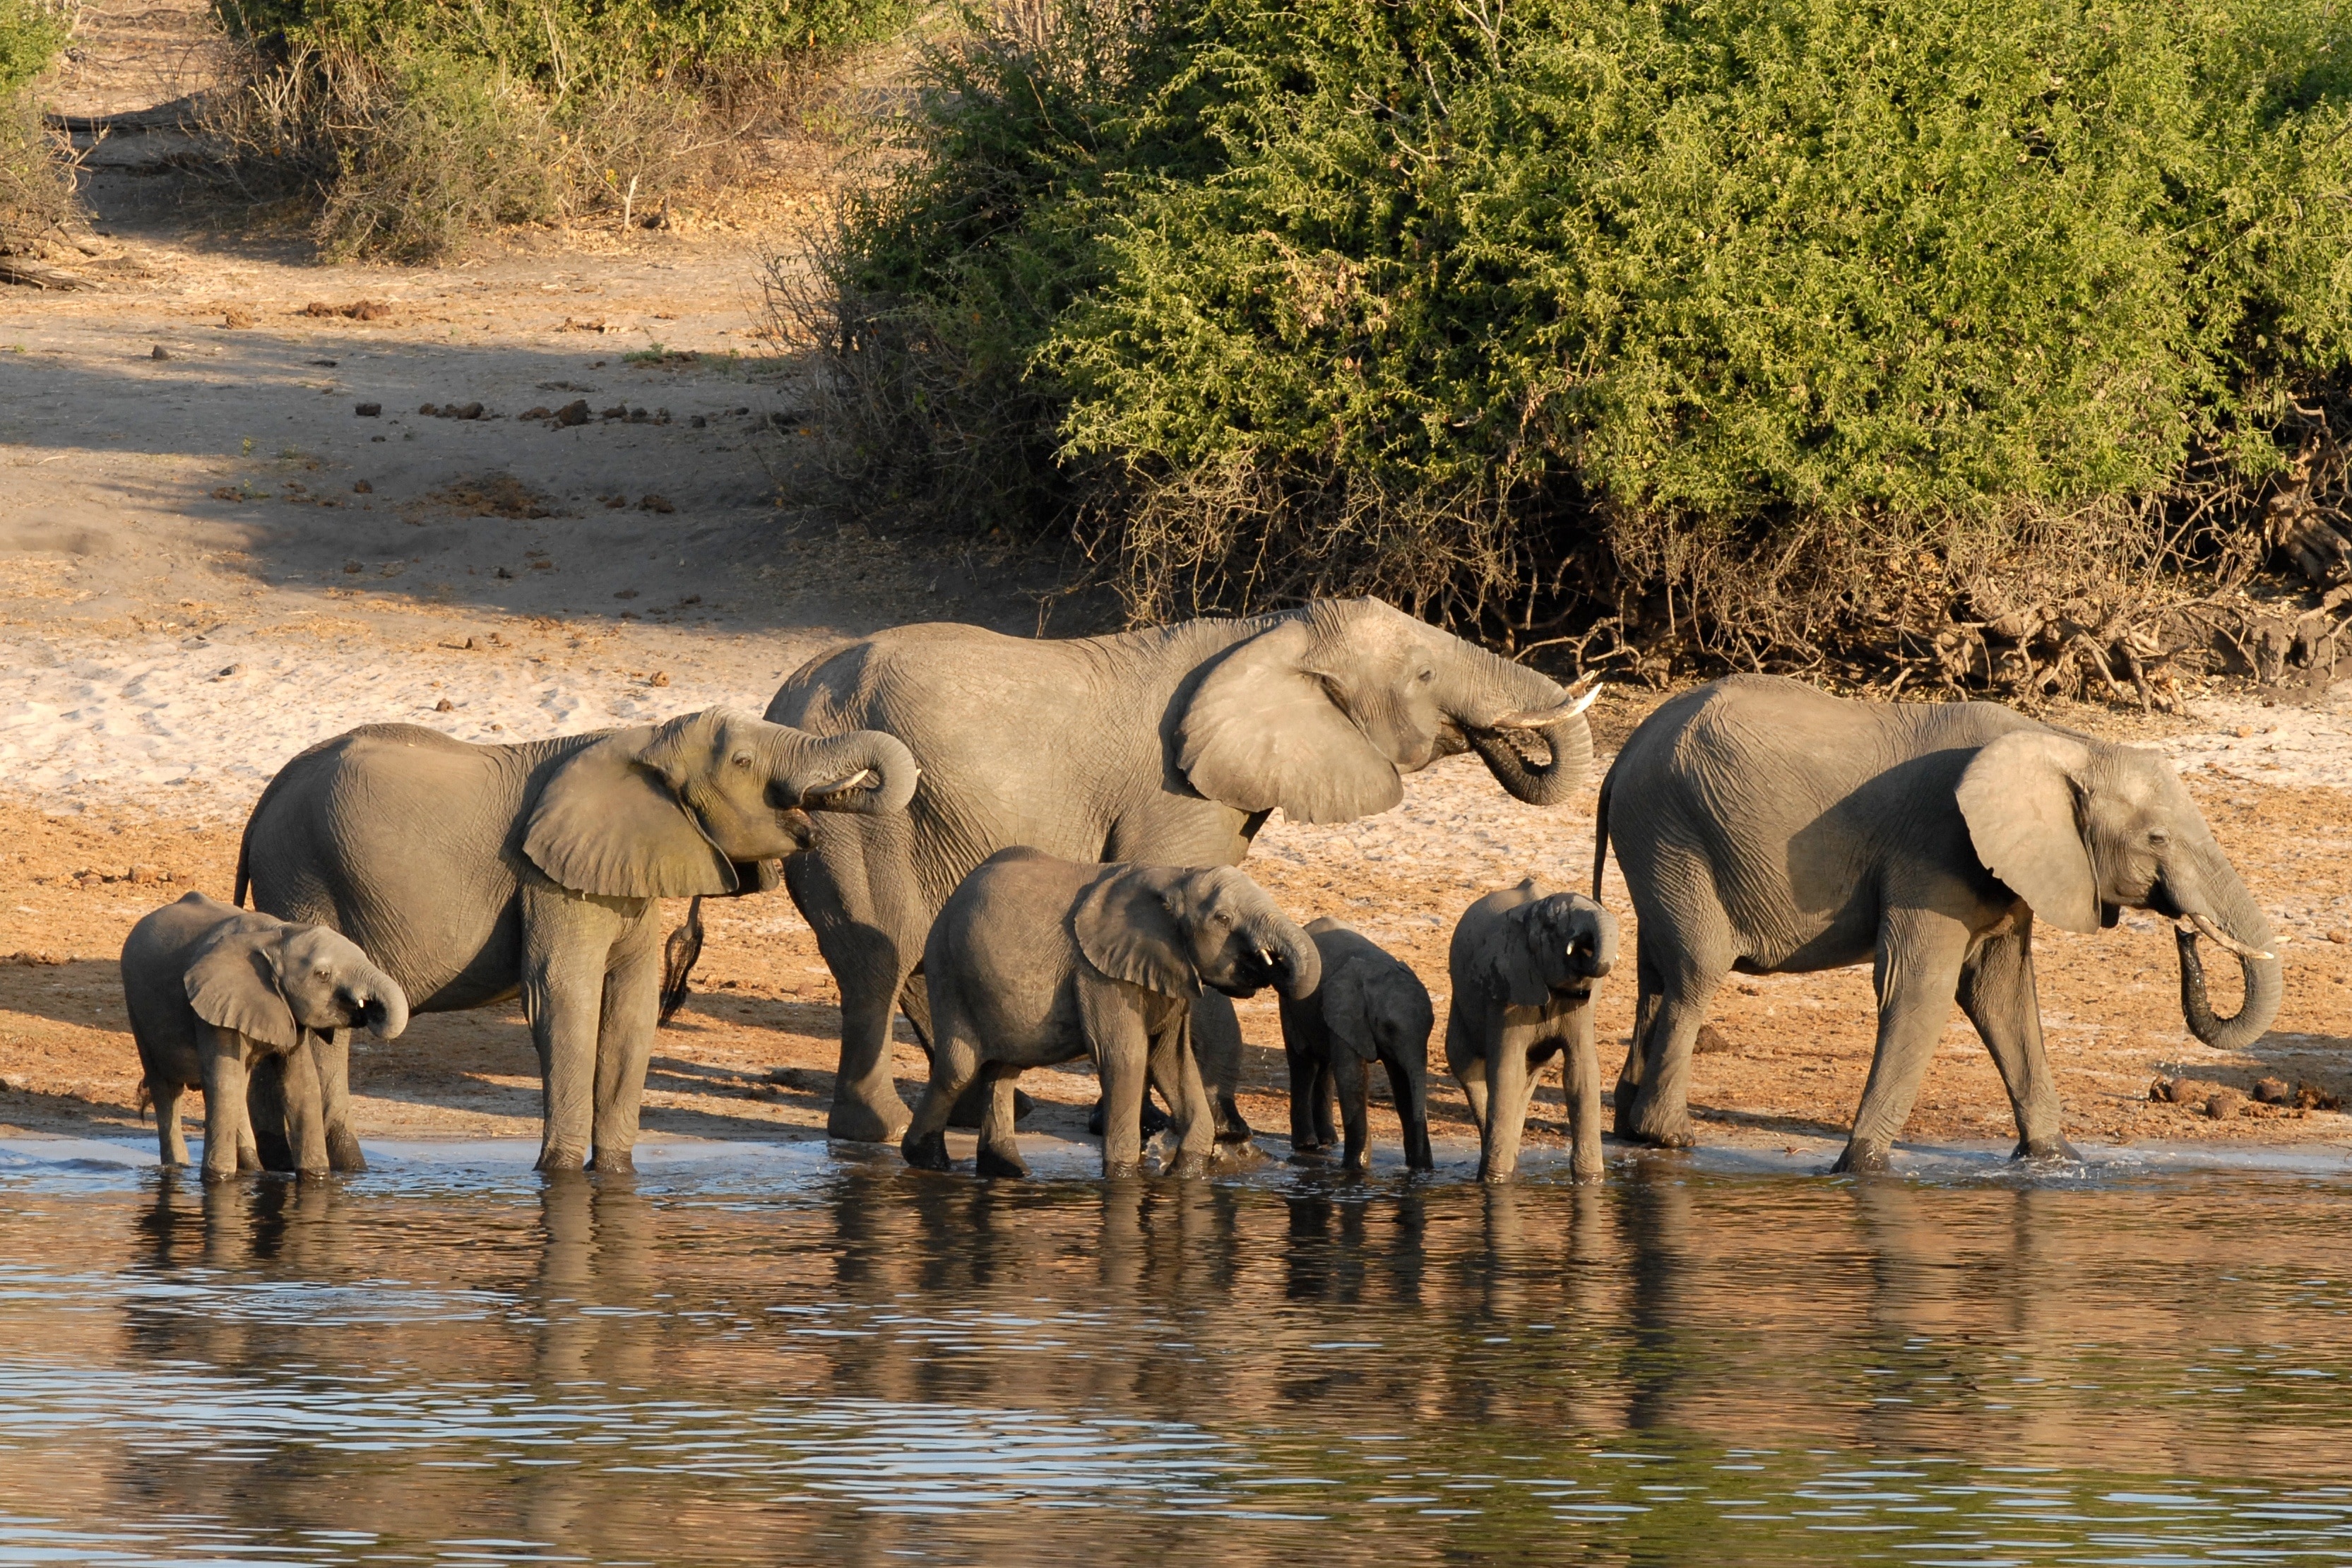 grey elephants on river at daytime